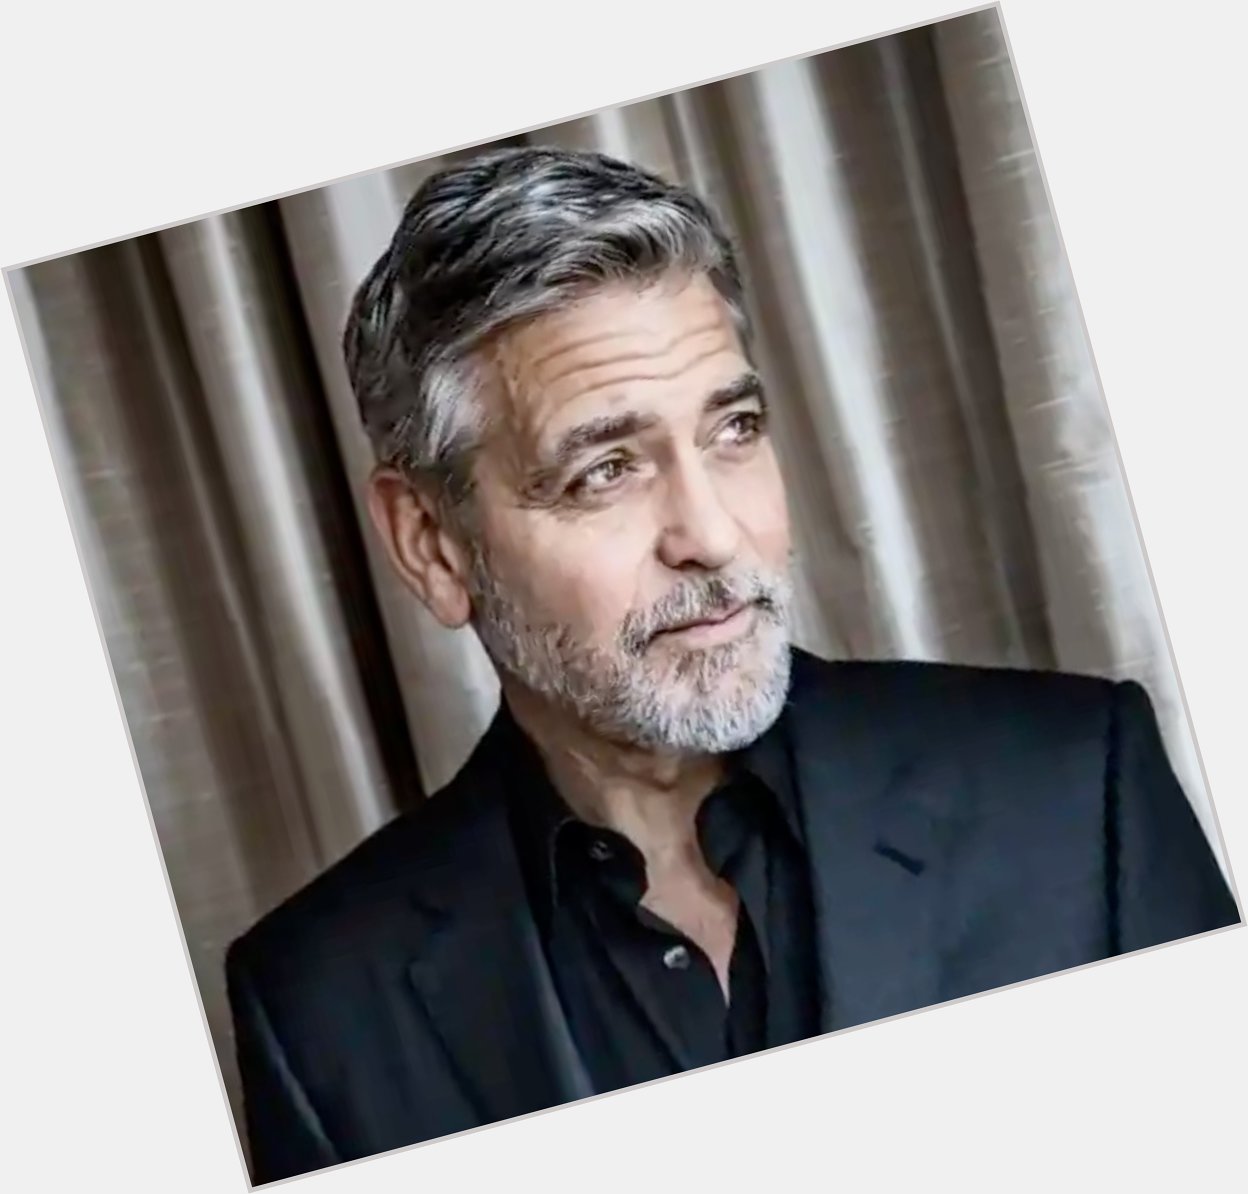 Happy birthday to George Clooney! 